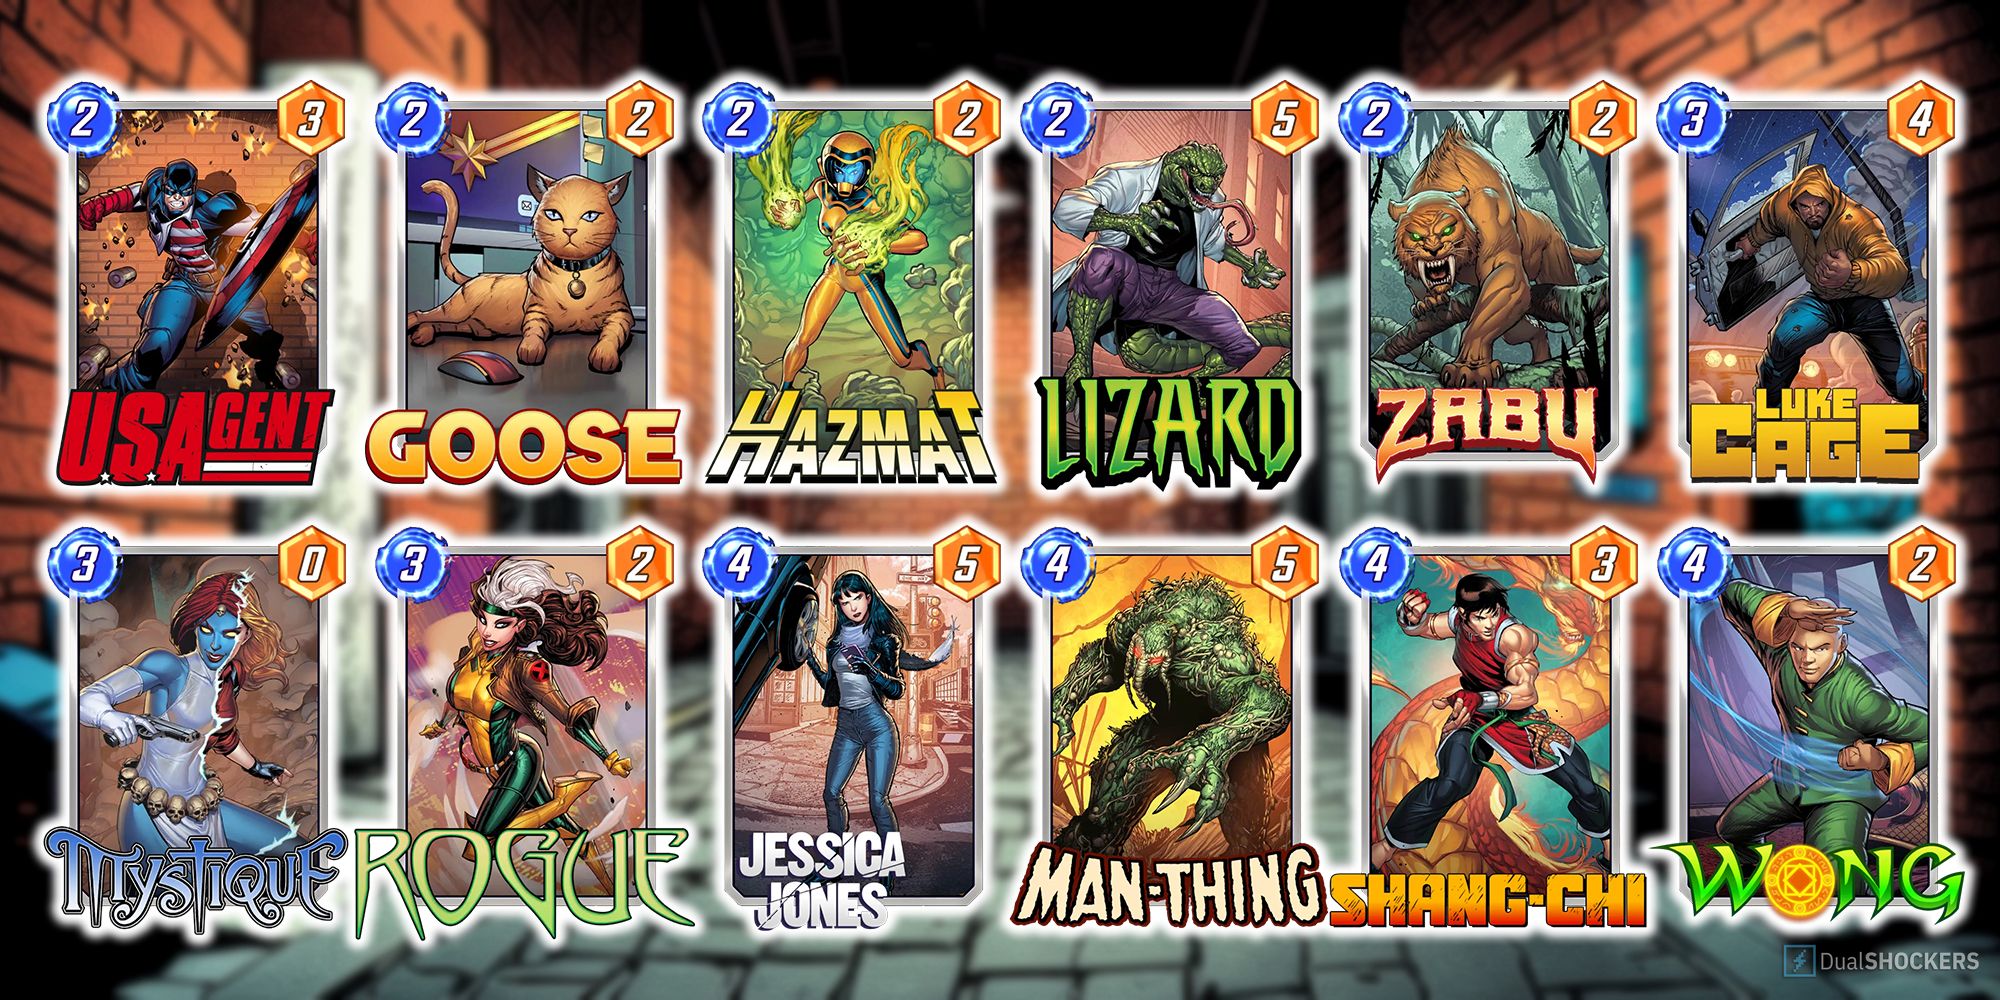 Marvel Snap deck comprised of U.S. Agent, Goose, Hazmat, Lizard, Zabu, Luke Cage, Mystique, Rogue, Jessica Jones, Man-Thing, Shang-Chi, and Wong.